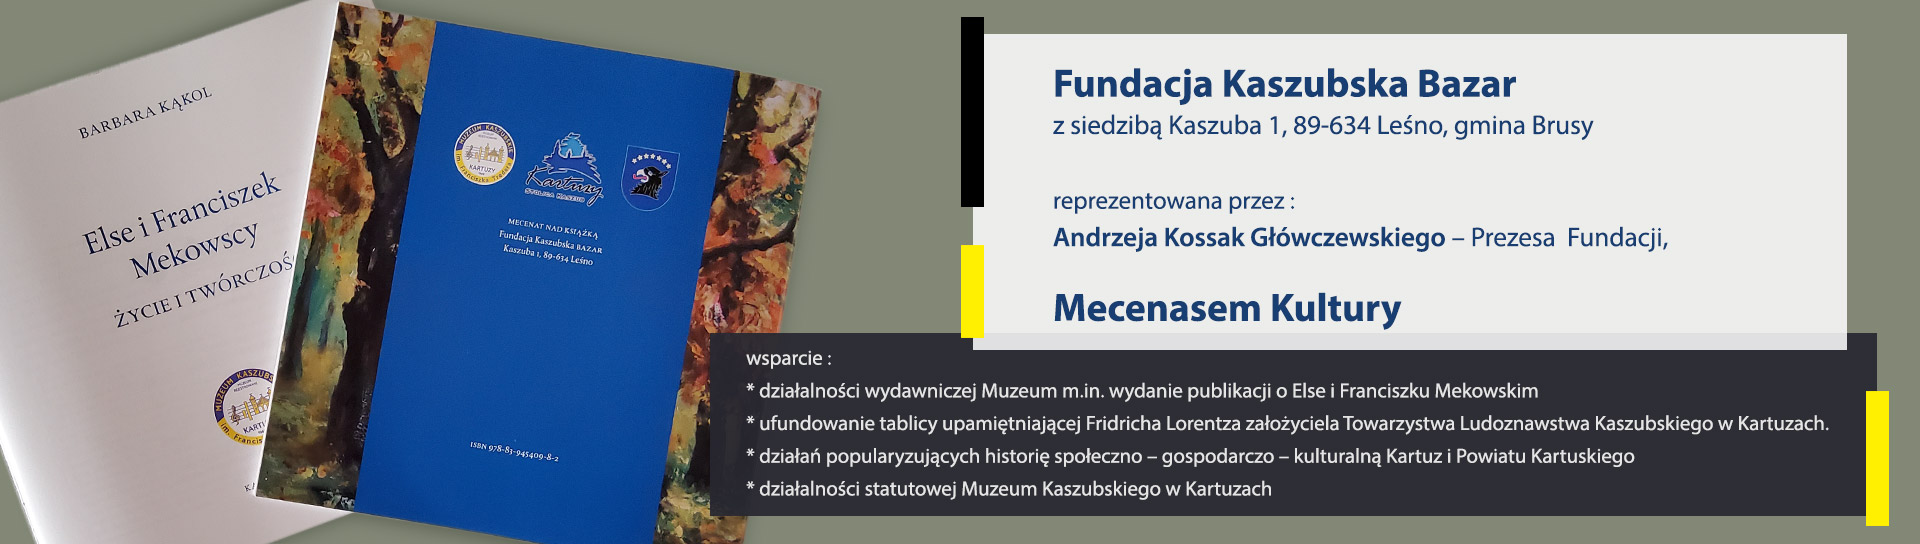 Fundacja Kaszubska Bazar Mecenasem Kultury